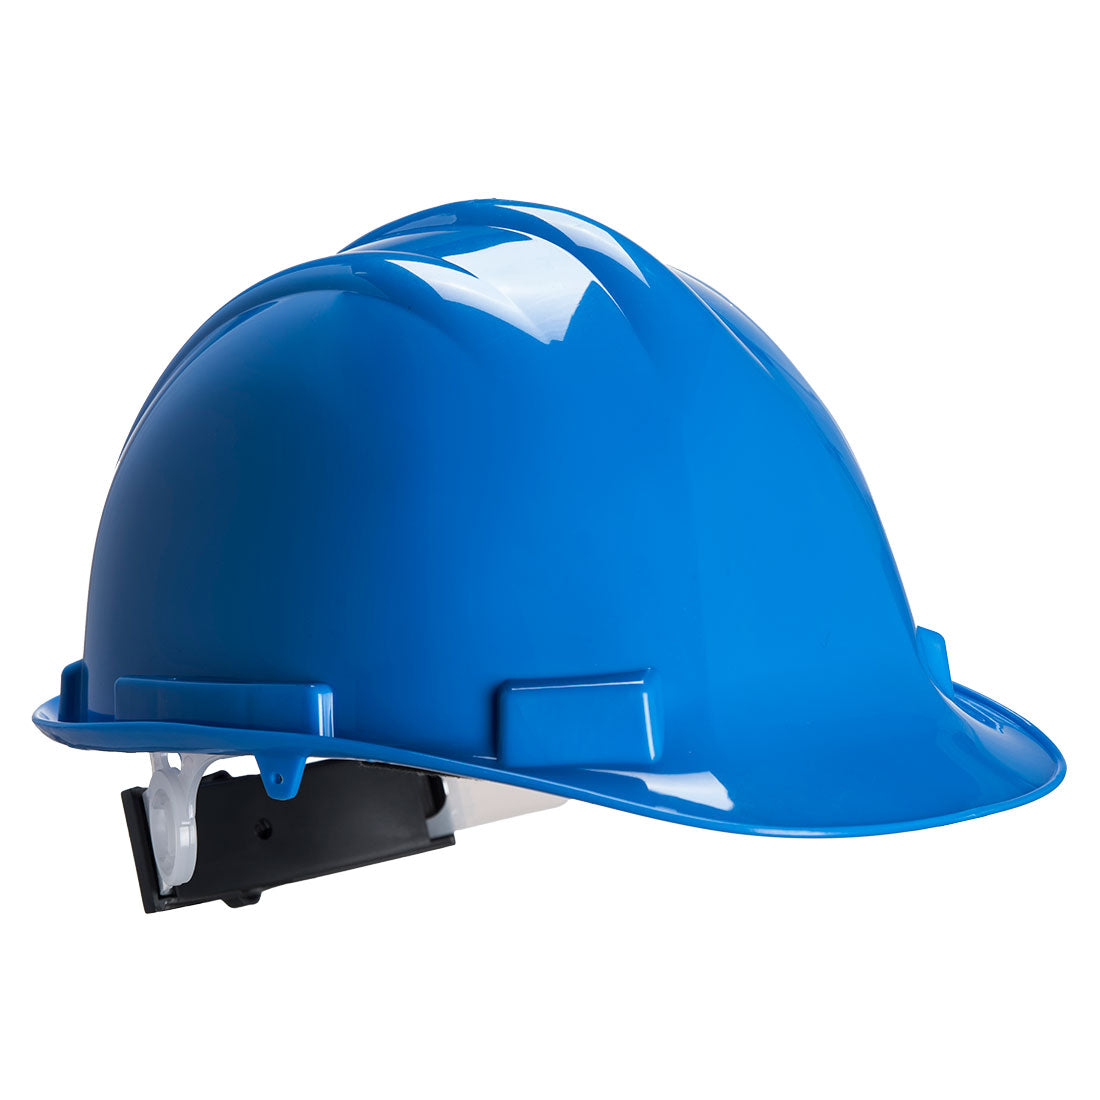 PW50 - Expertbase Safety Helmet Royal Blue